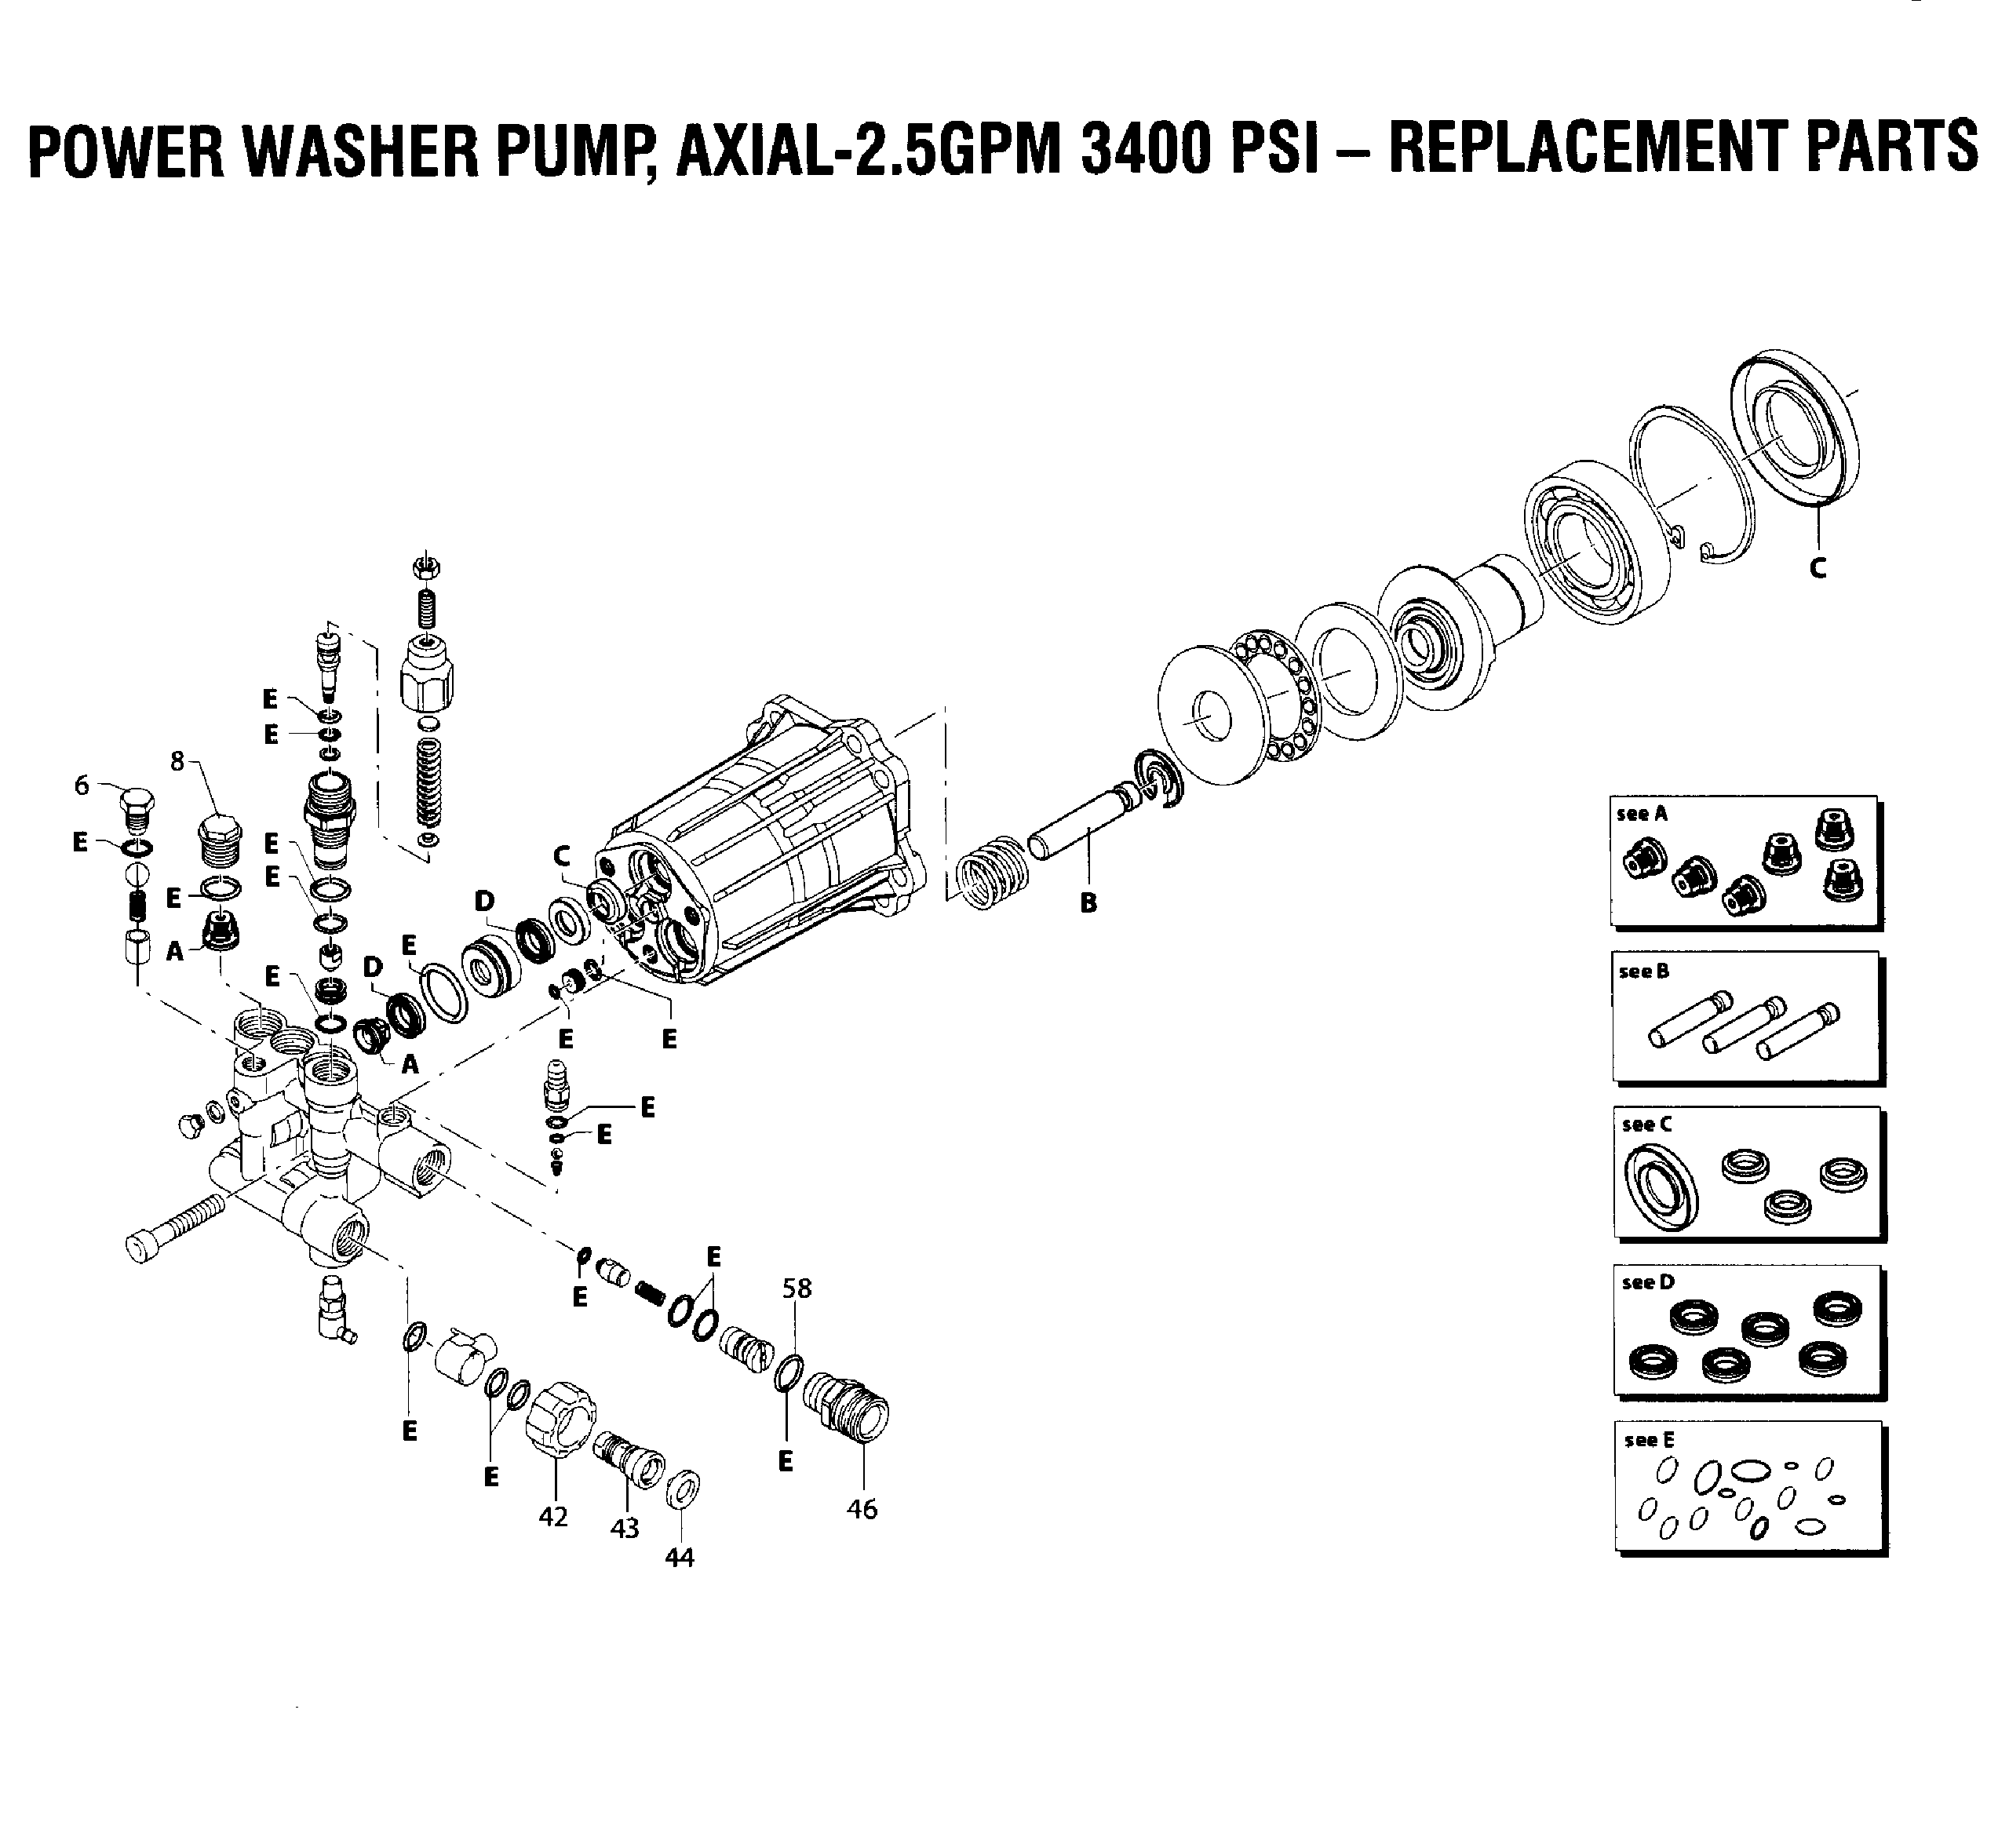 Pressure Washer Pump Parts Diagram General Wiring Diagram